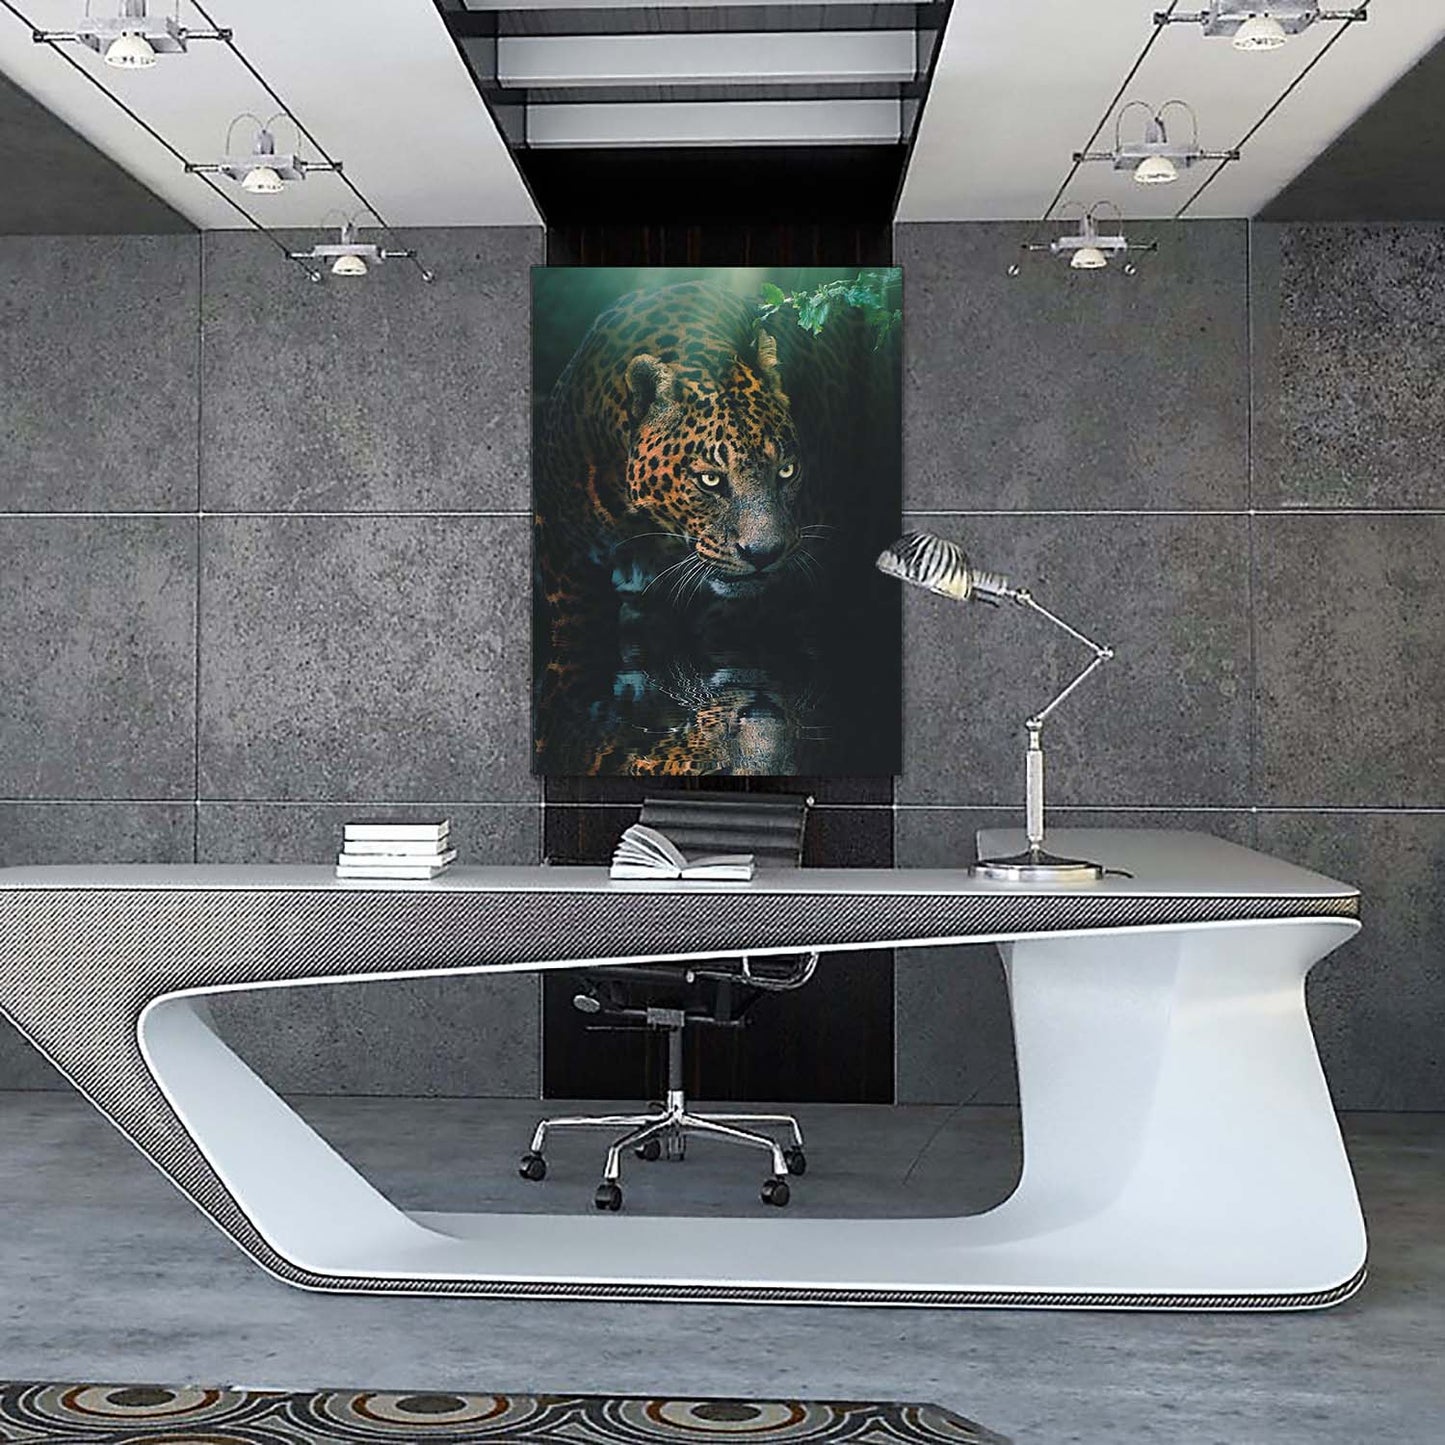 Jaguar Water Reflection Wall Art | Inspirational Wall Art Motivational Wall Art Quotes Office Art | ImpaktMaker Exclusive Canvas Art Portrait